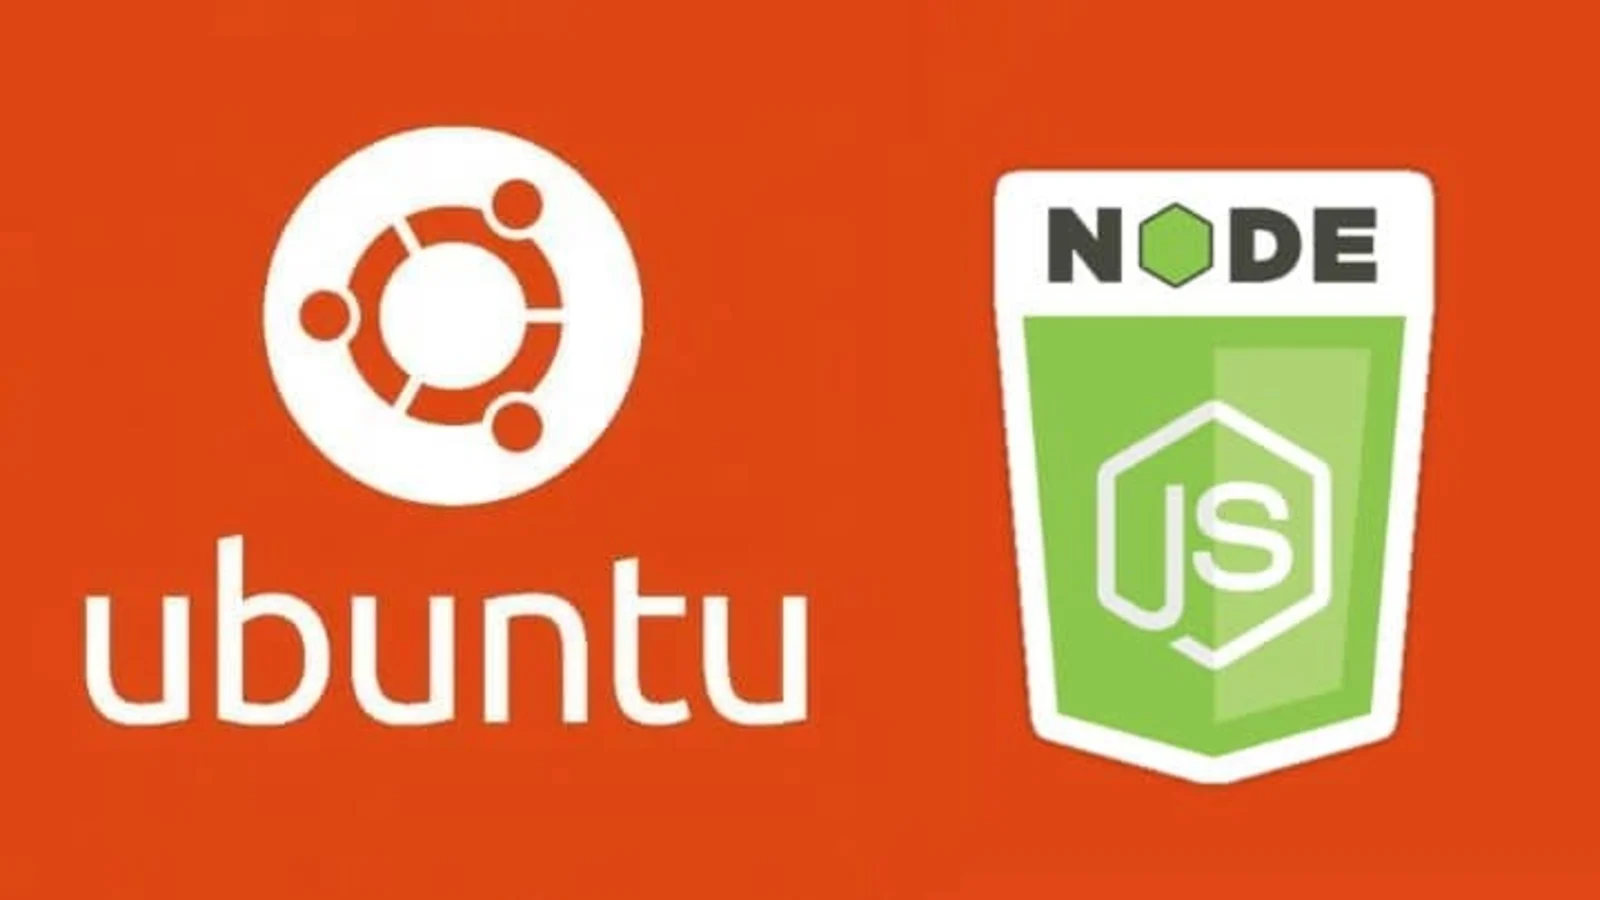 How To Install Node.js on Ubuntu 22.04